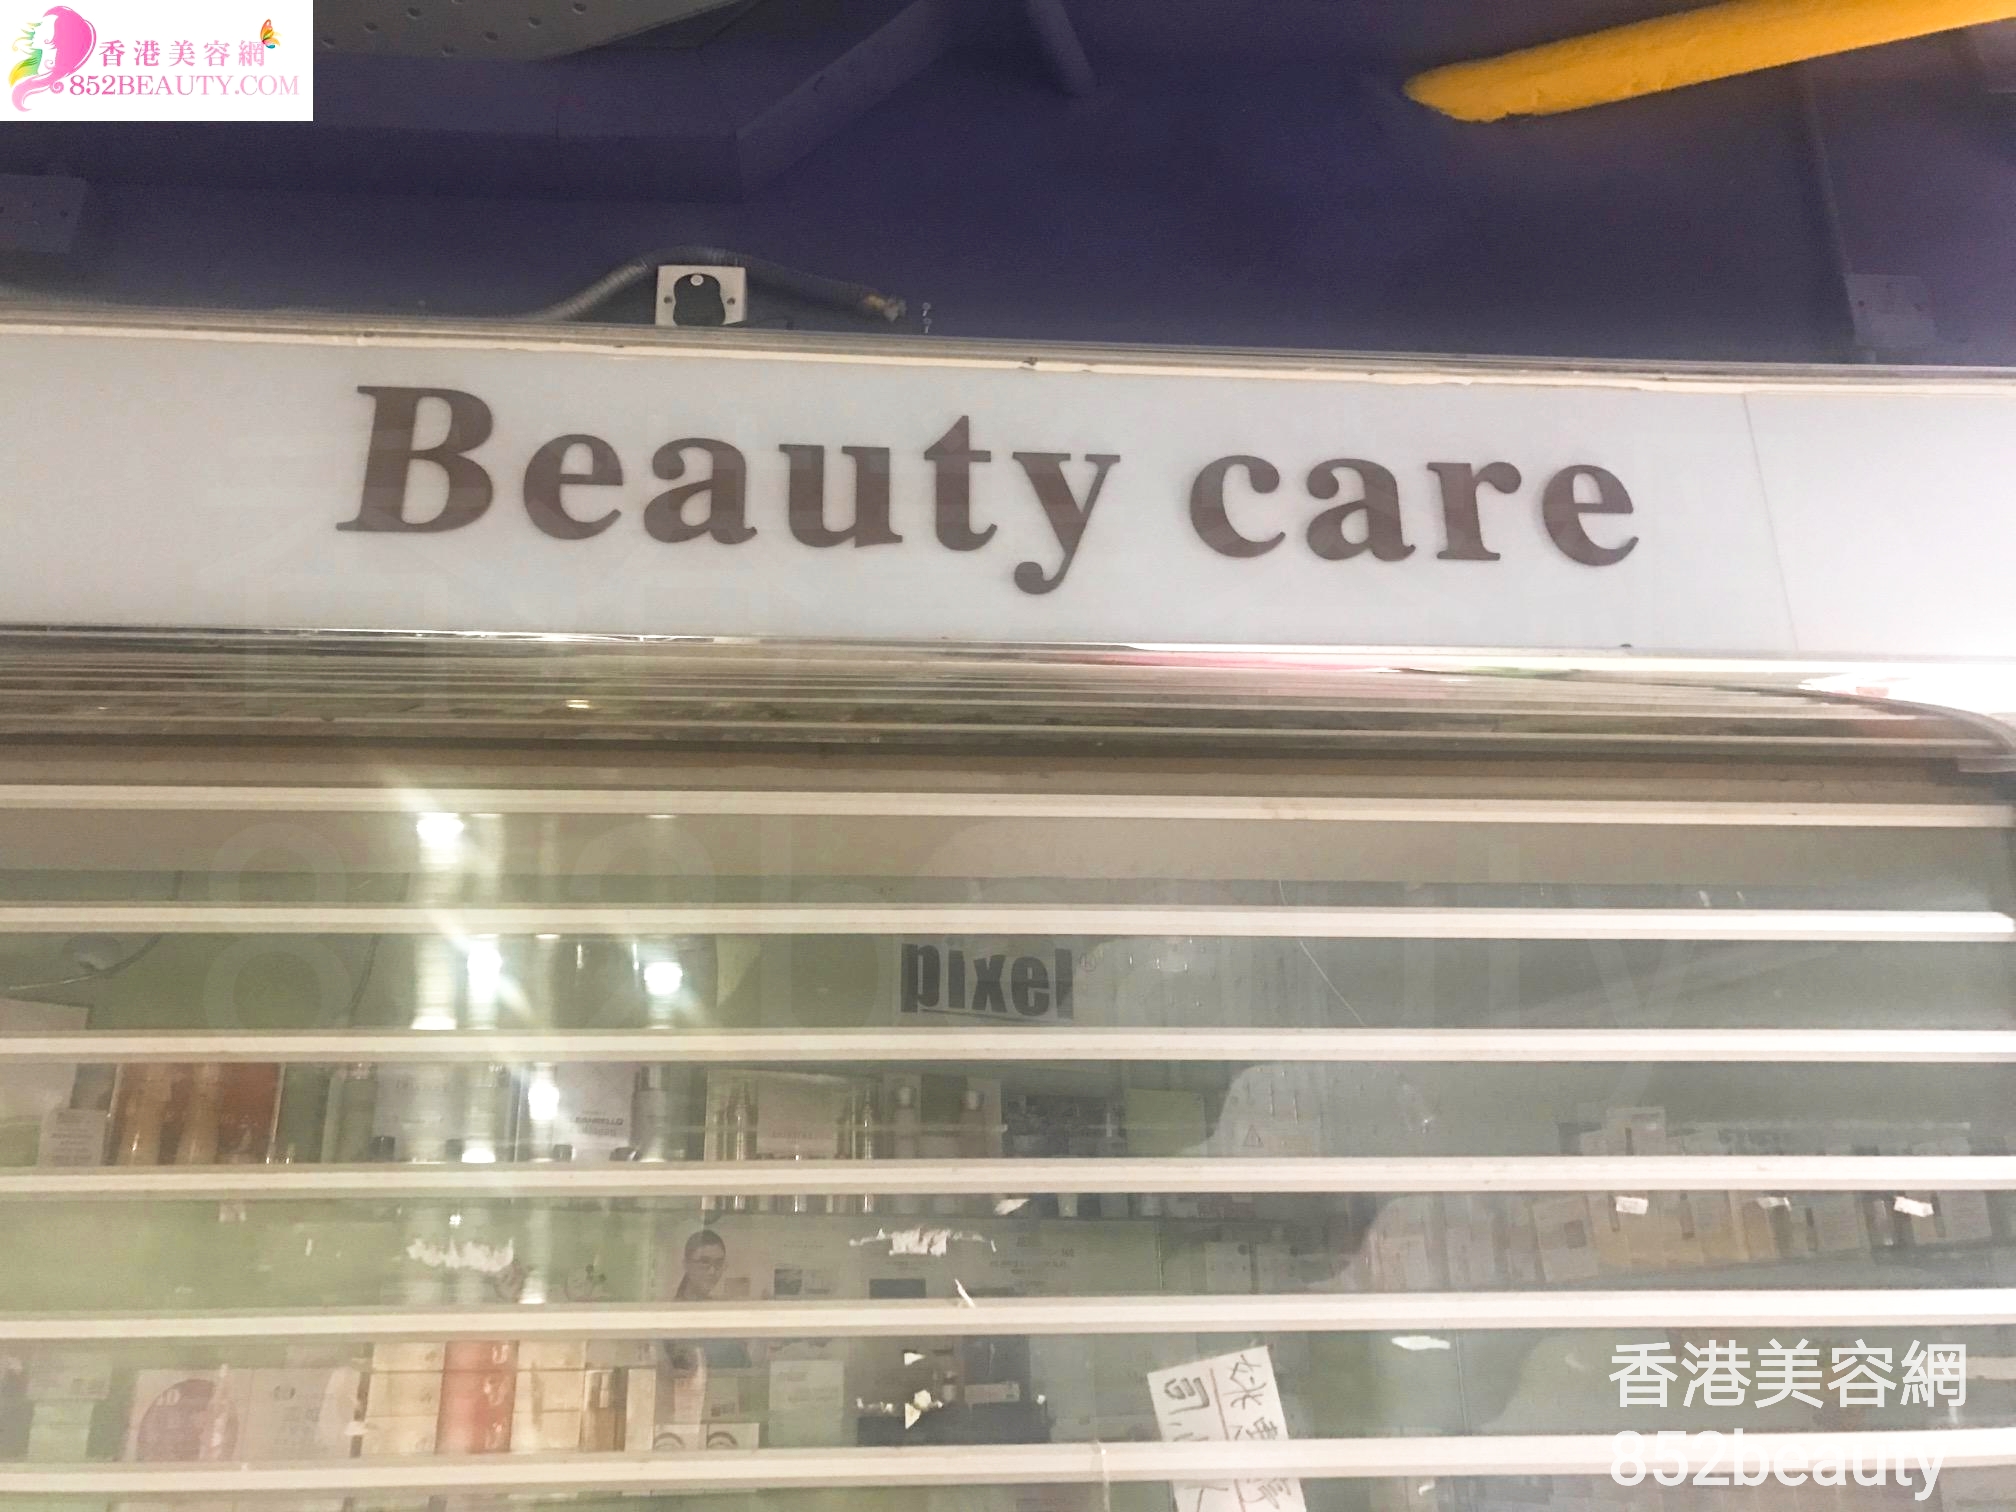 Eye Care: Beauty care